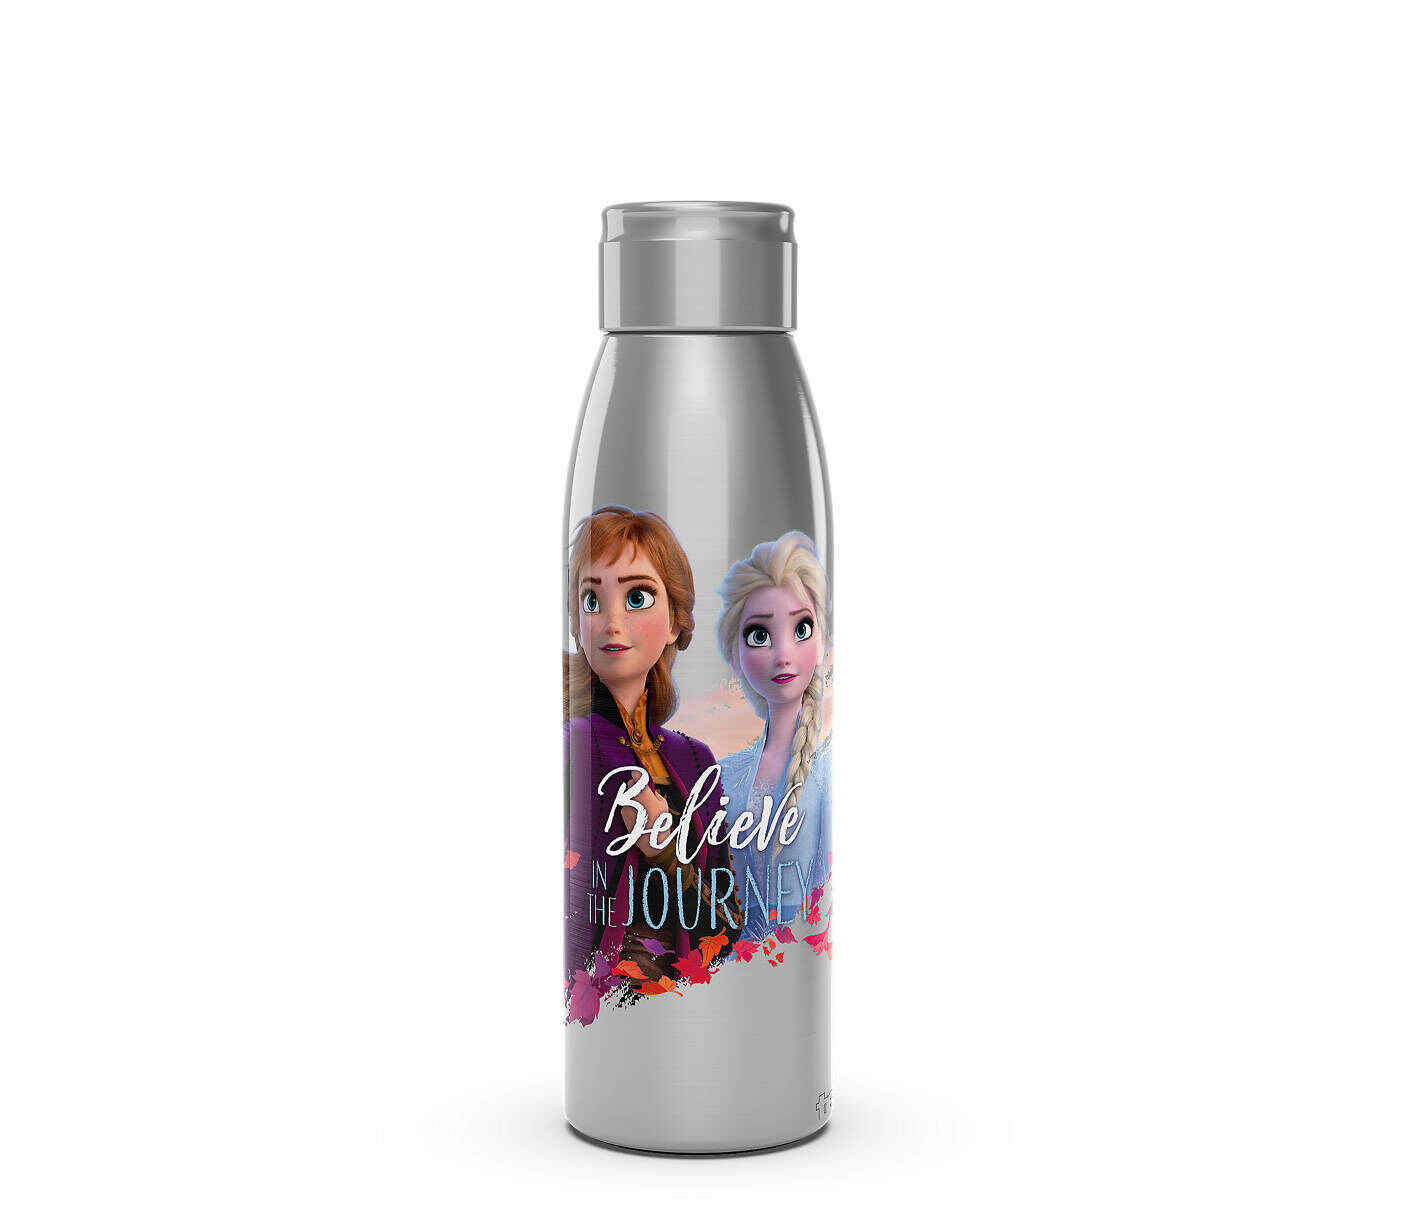 Details about   Tak Disney Frozen II Plastic Water Bottles & Stationery Set NEW 